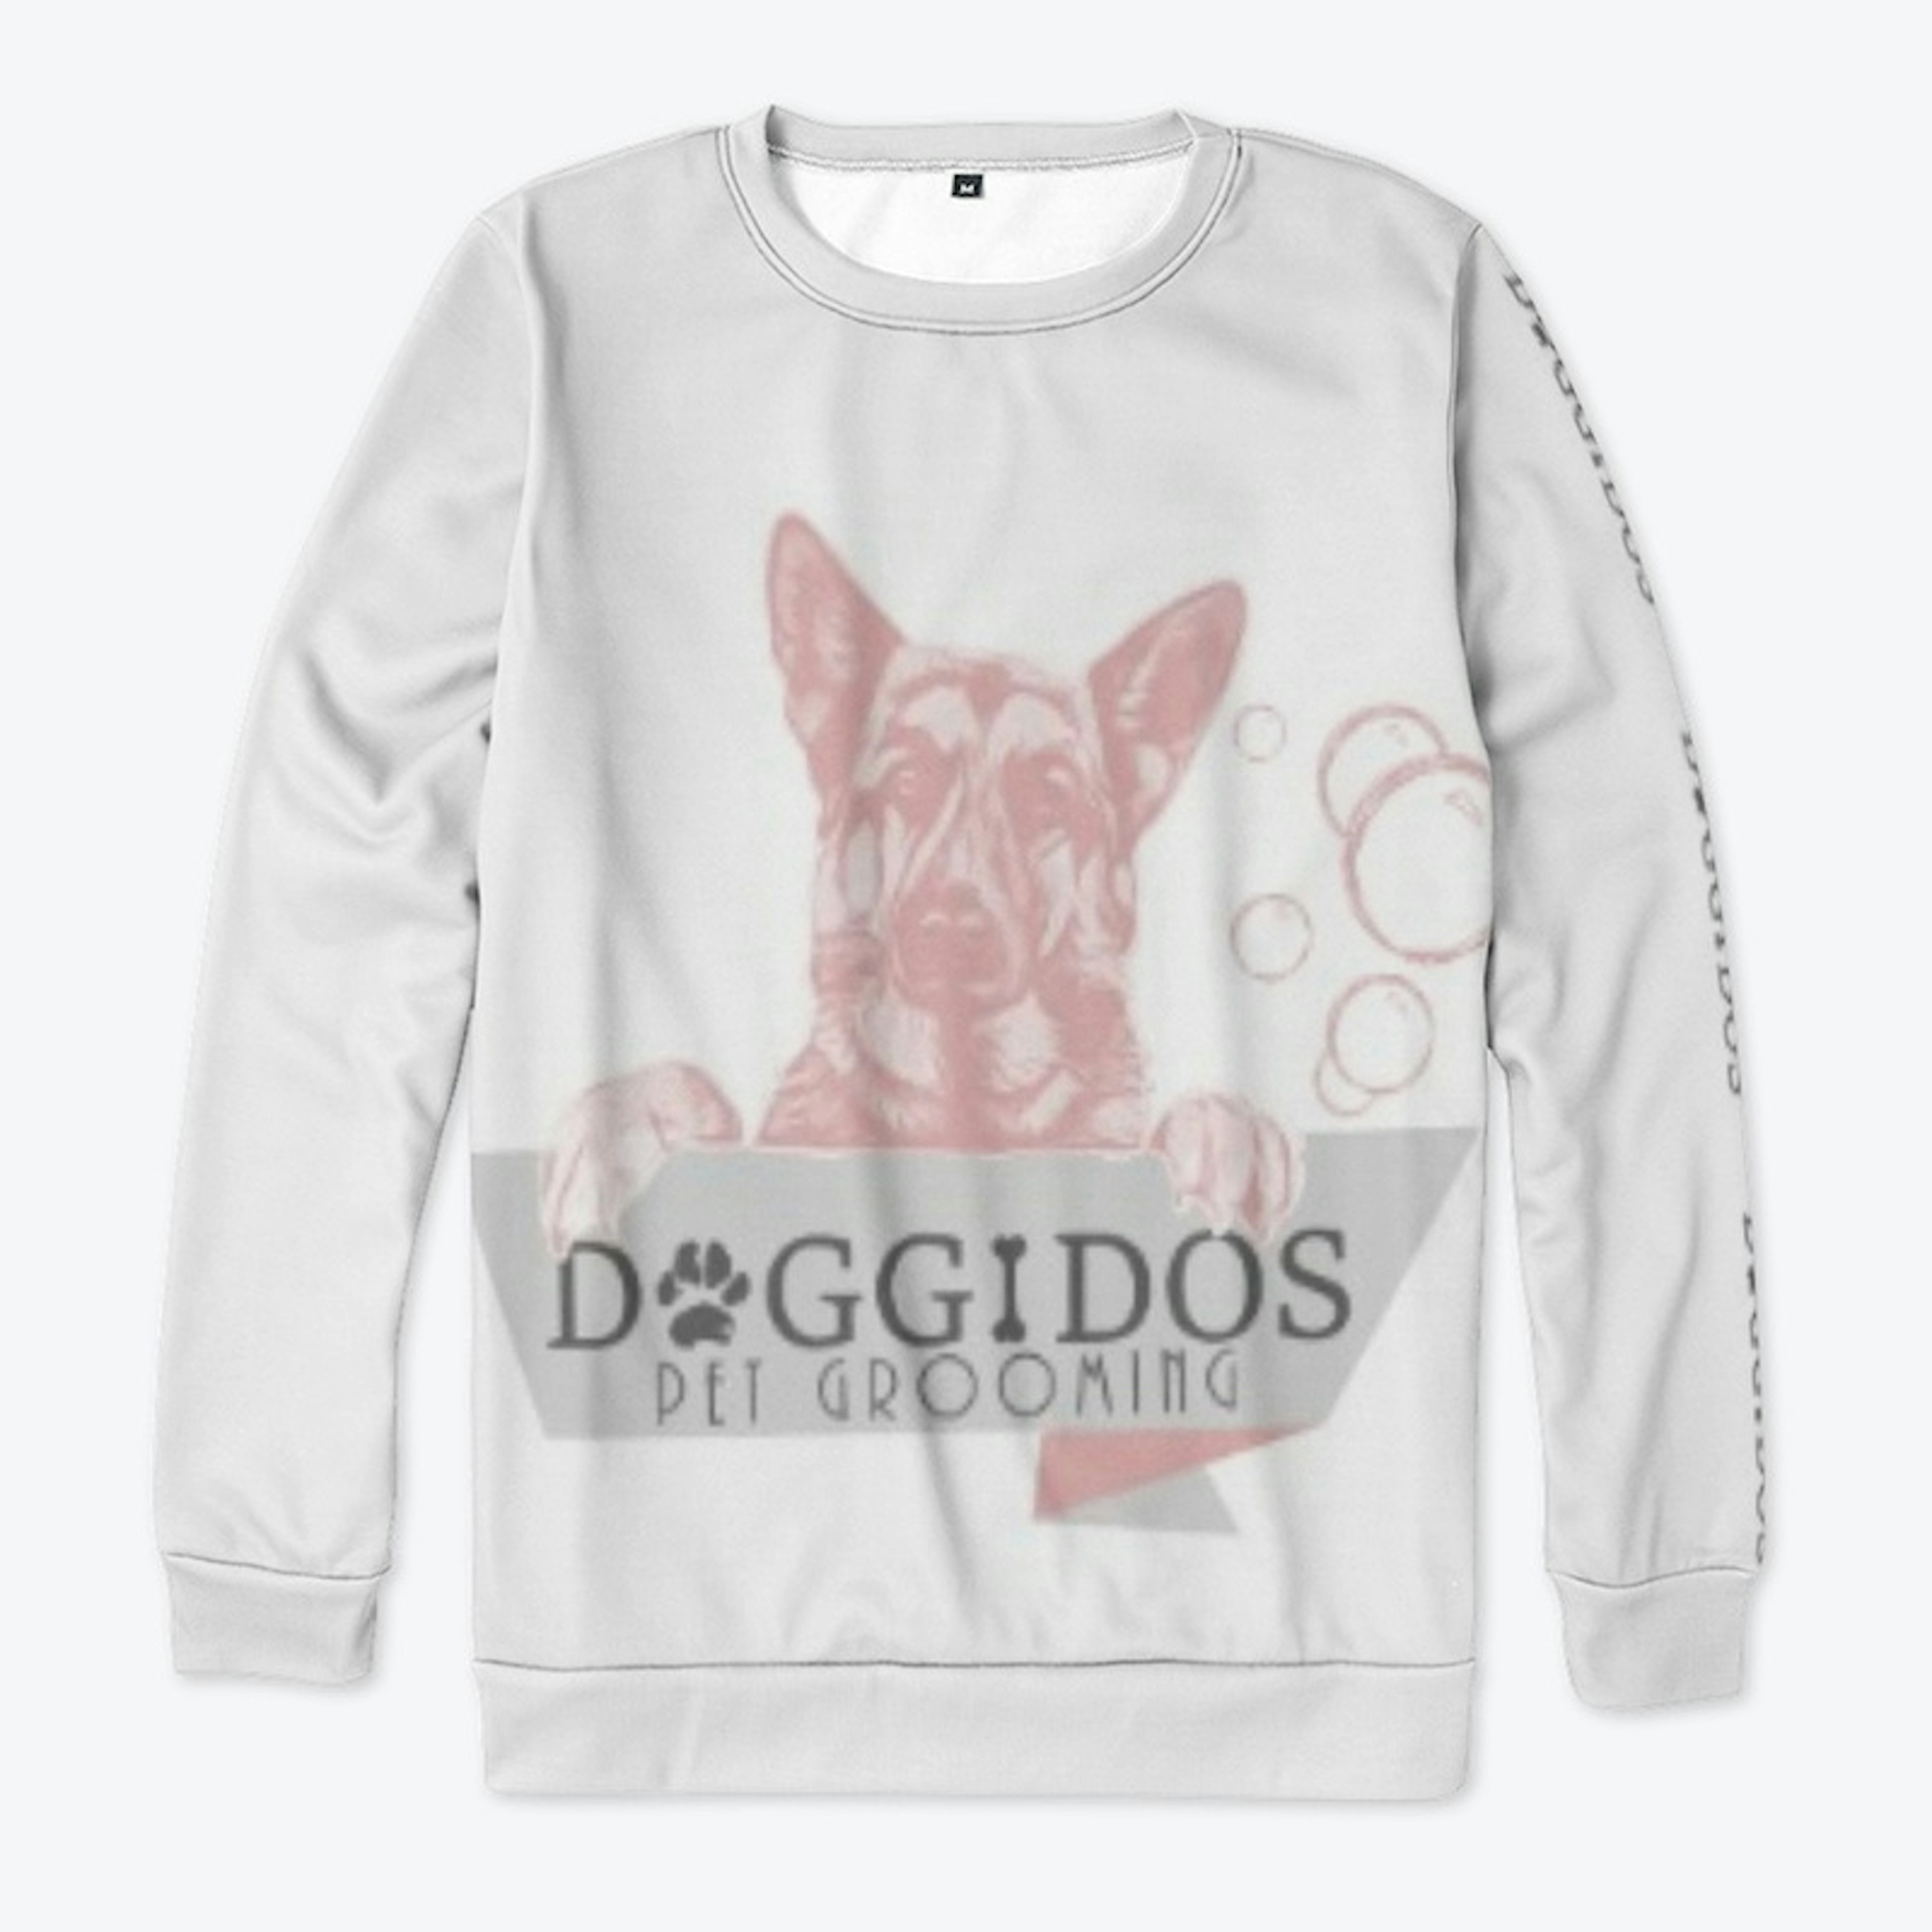 Doggidos Graphic Tee 5